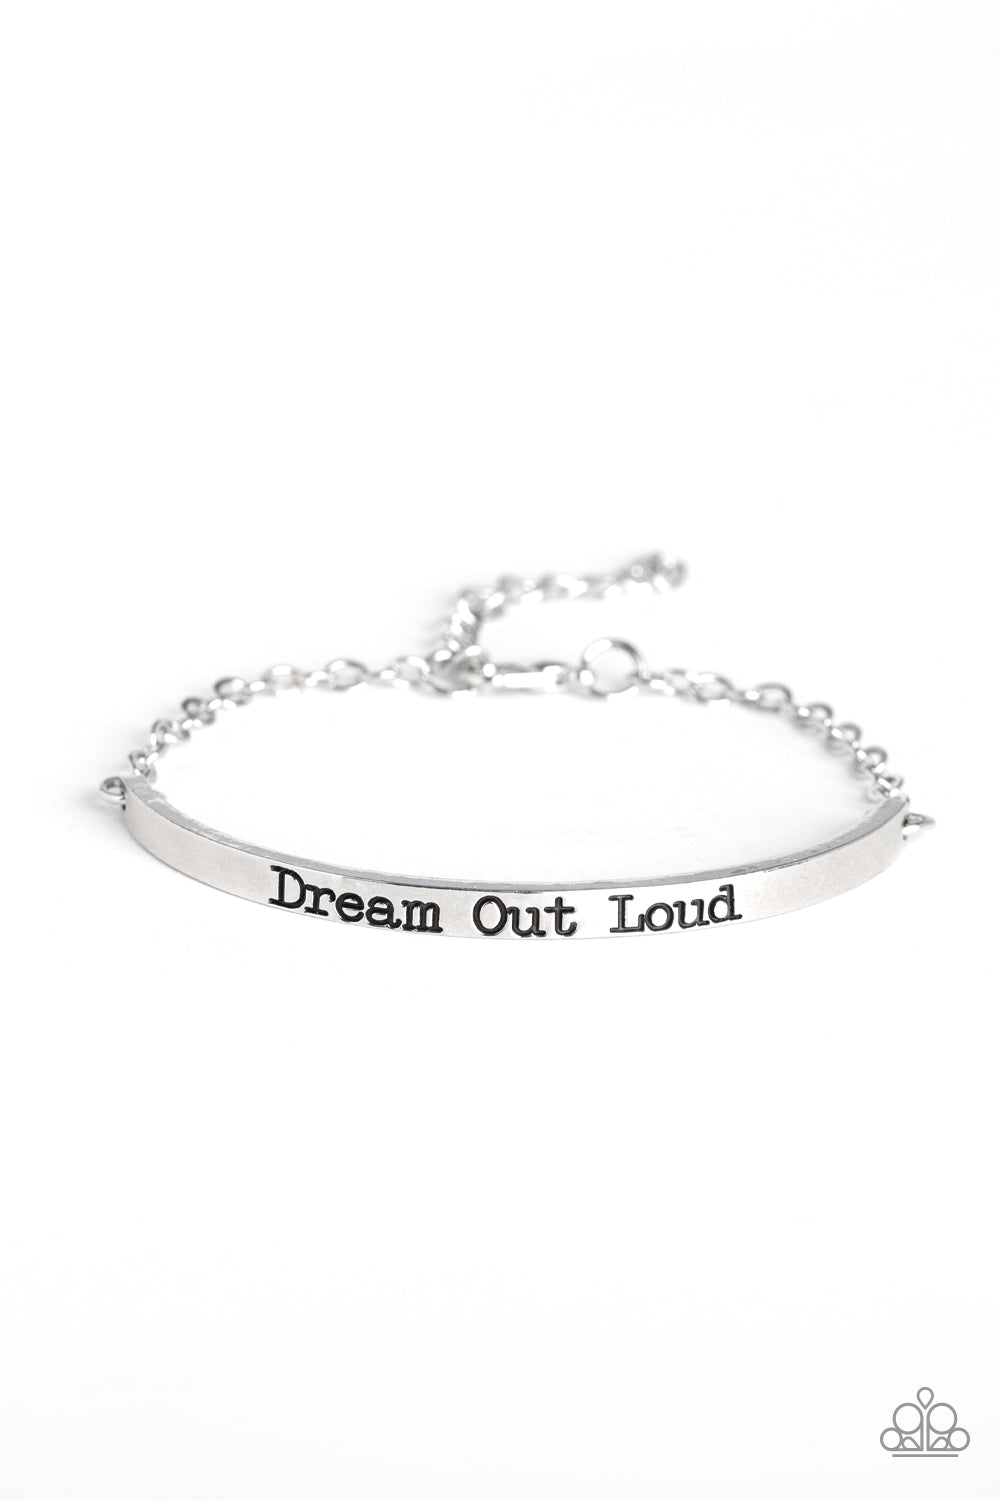 Dream Out Loud Silver Inspirational Bracelet - Paparazzi Accessories